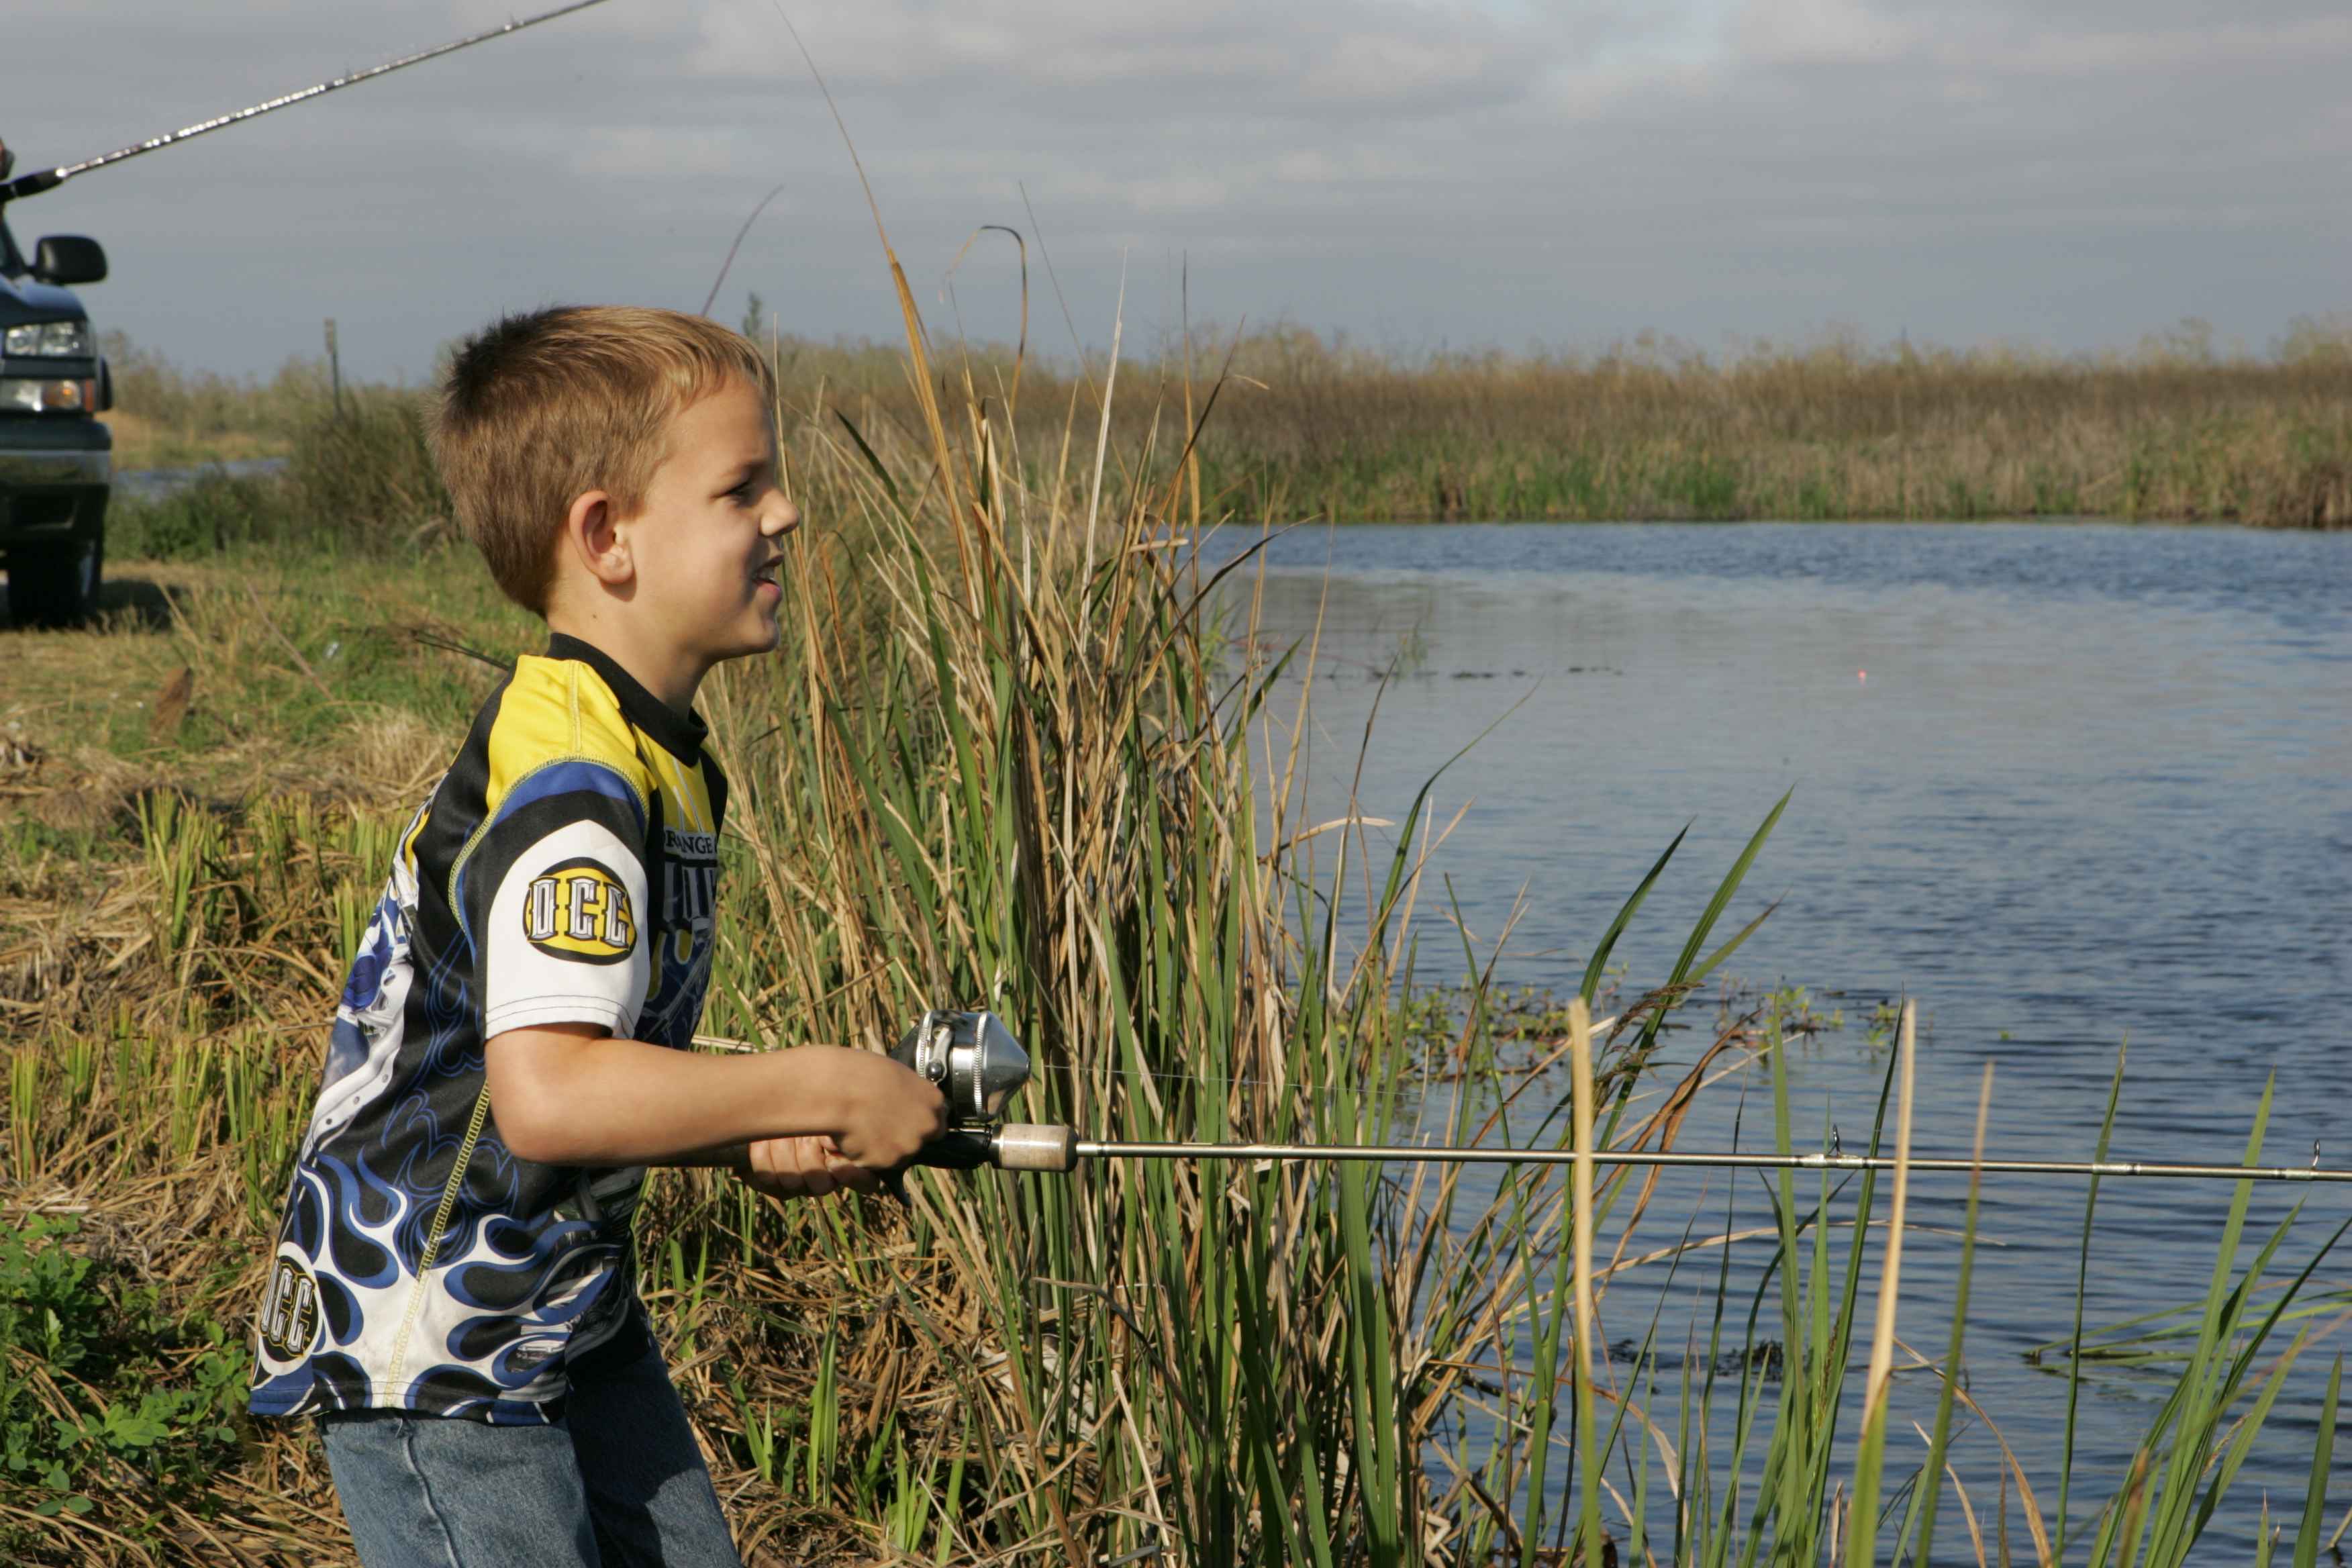 File:A young boy fishing.jpg - Wikimedia Commons